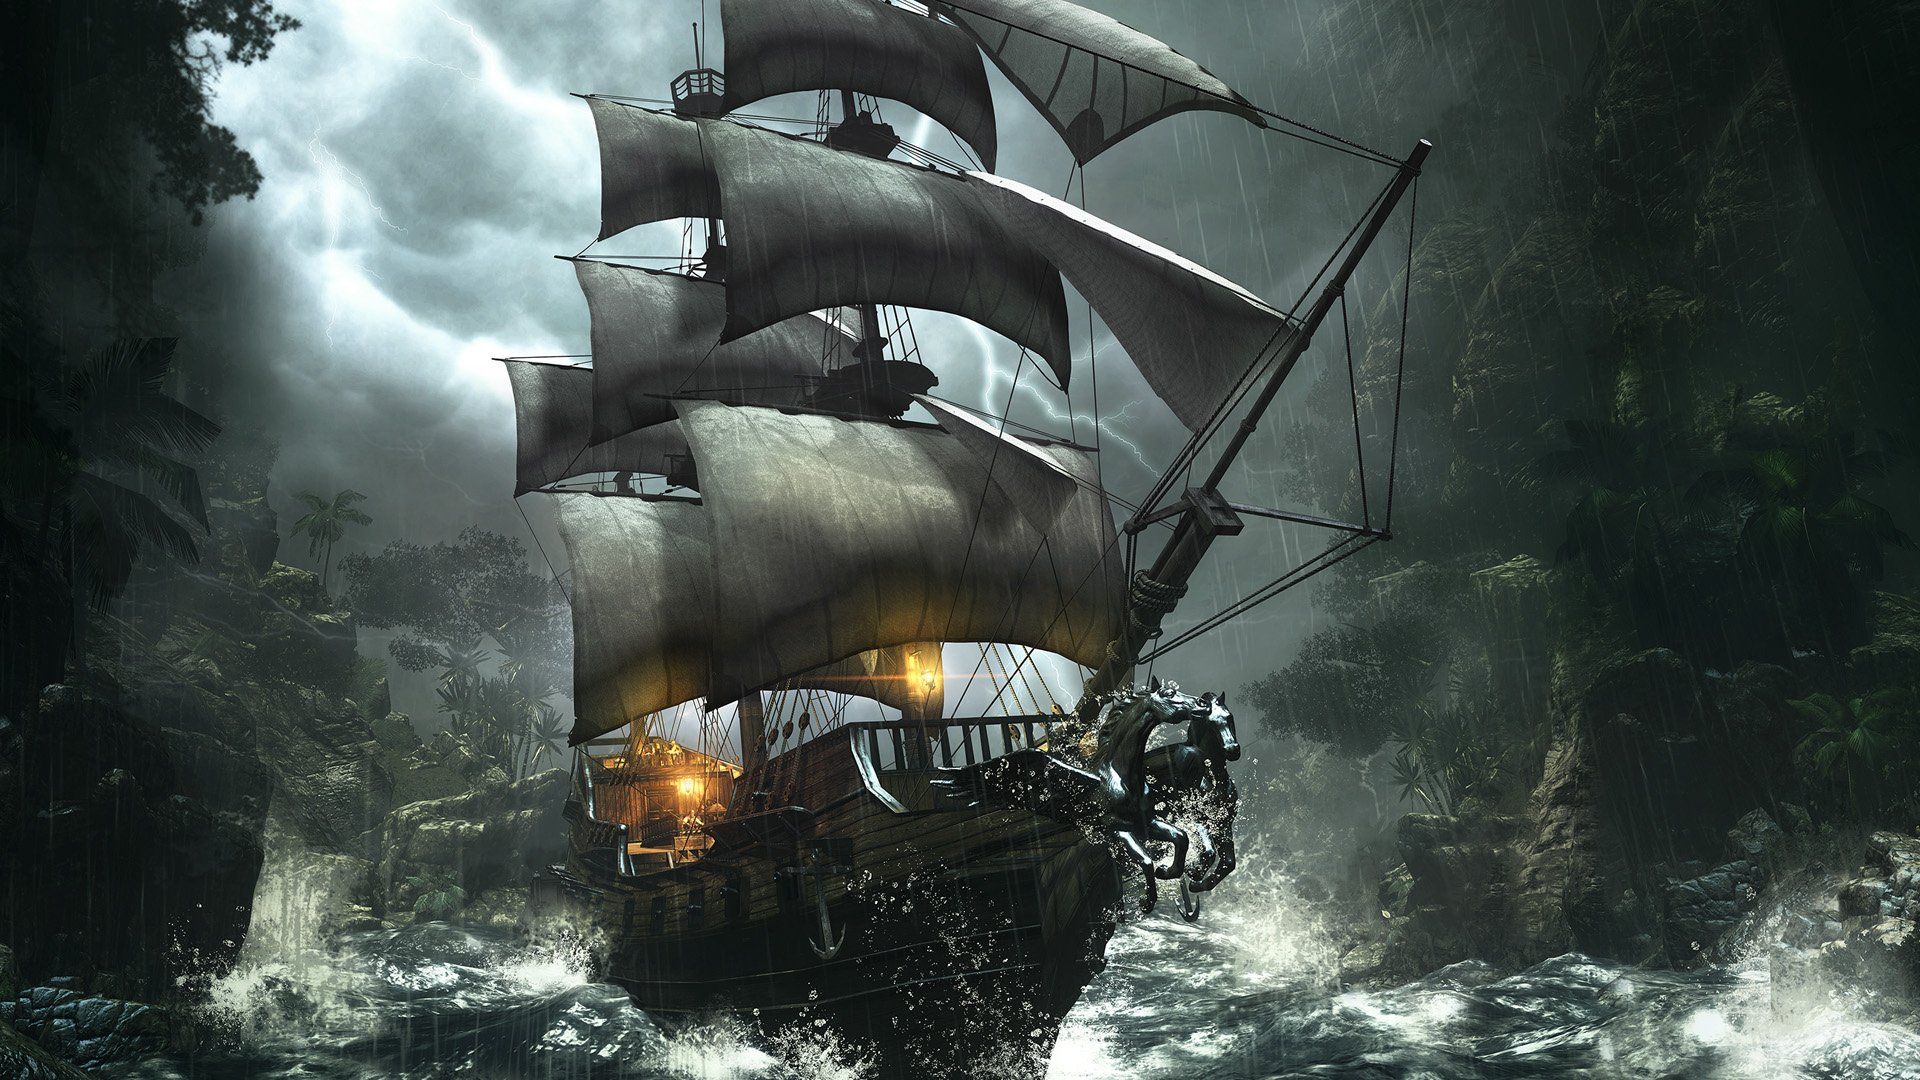 Pirate Ship Wallpaper for Desktop